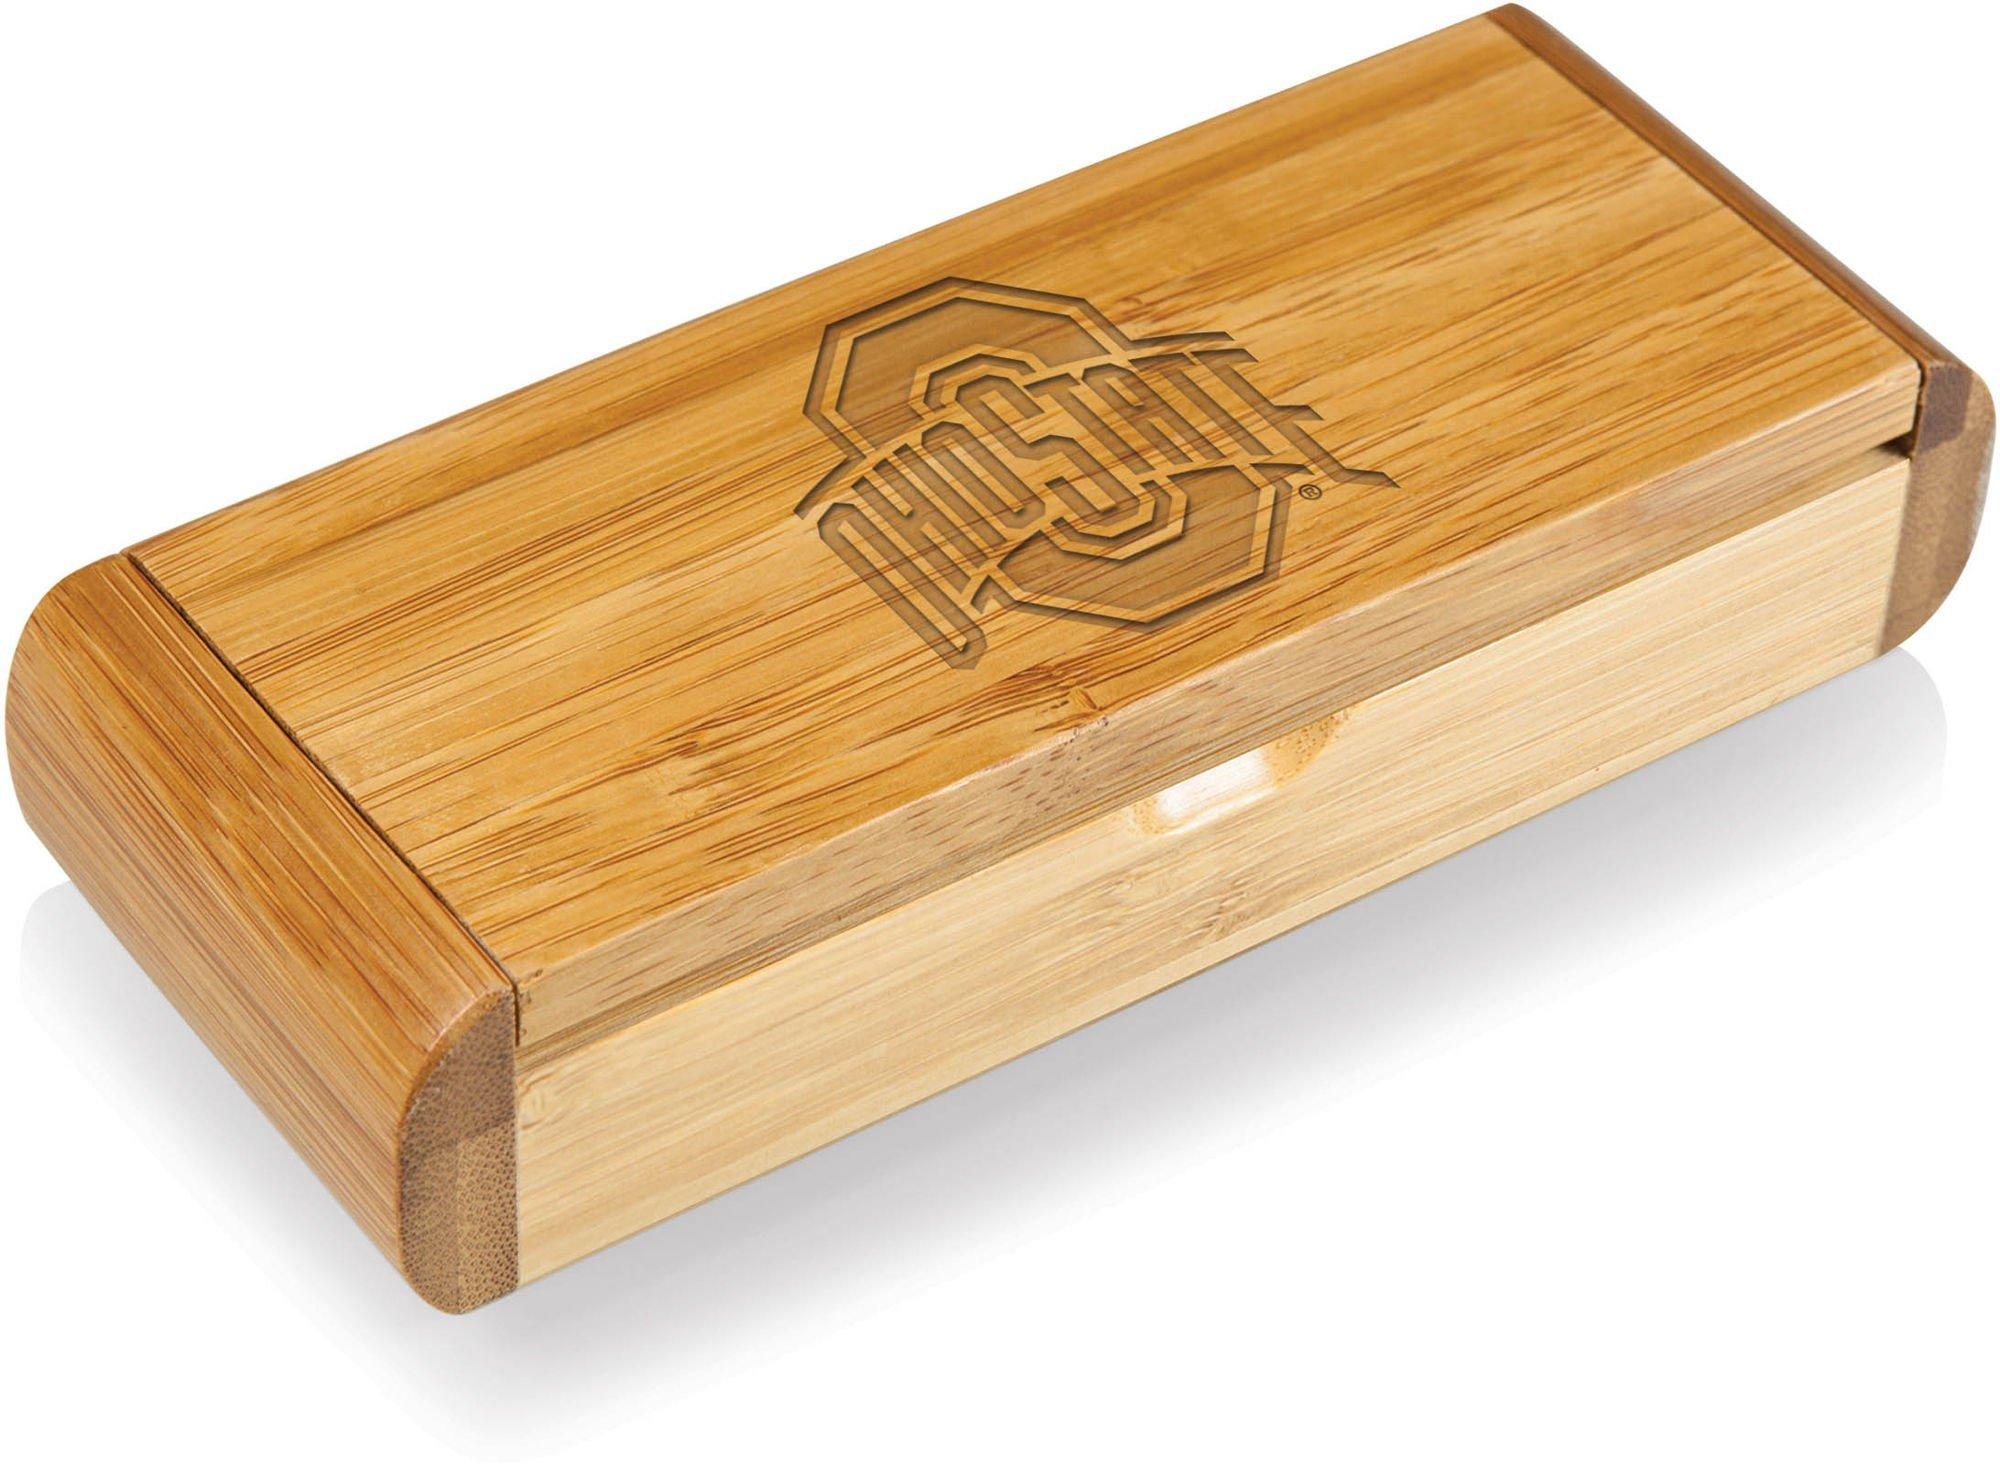 Ohio State Elan Corkscrew Box by Picnic Time